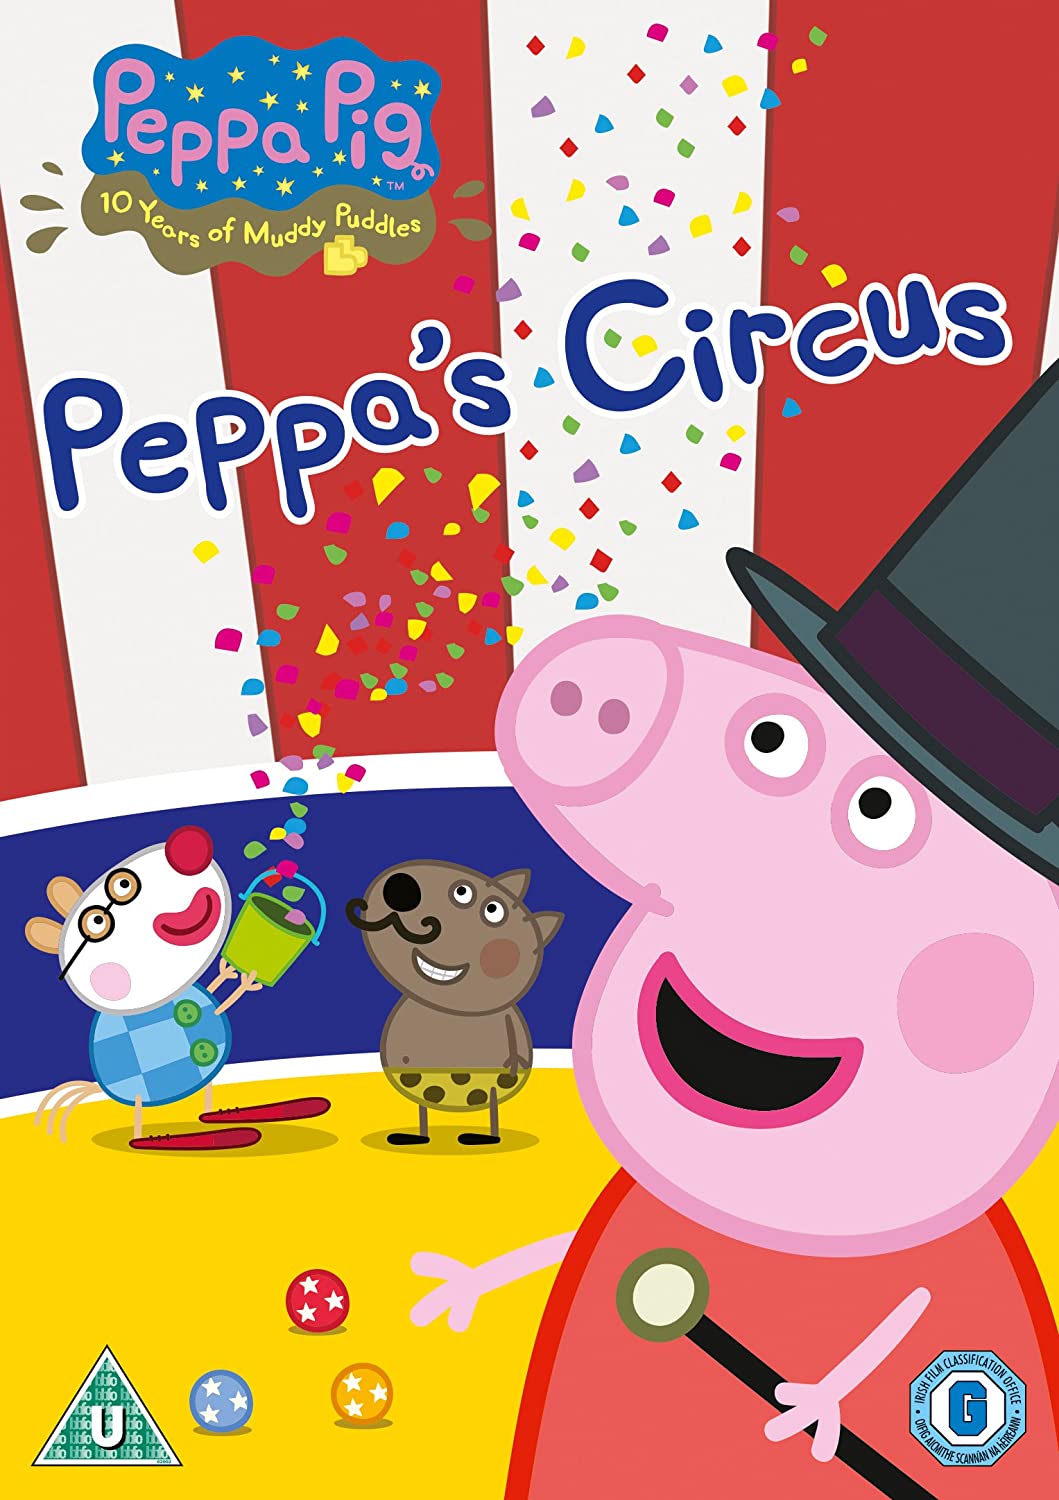 Peppa Pig: Peppa's Circus